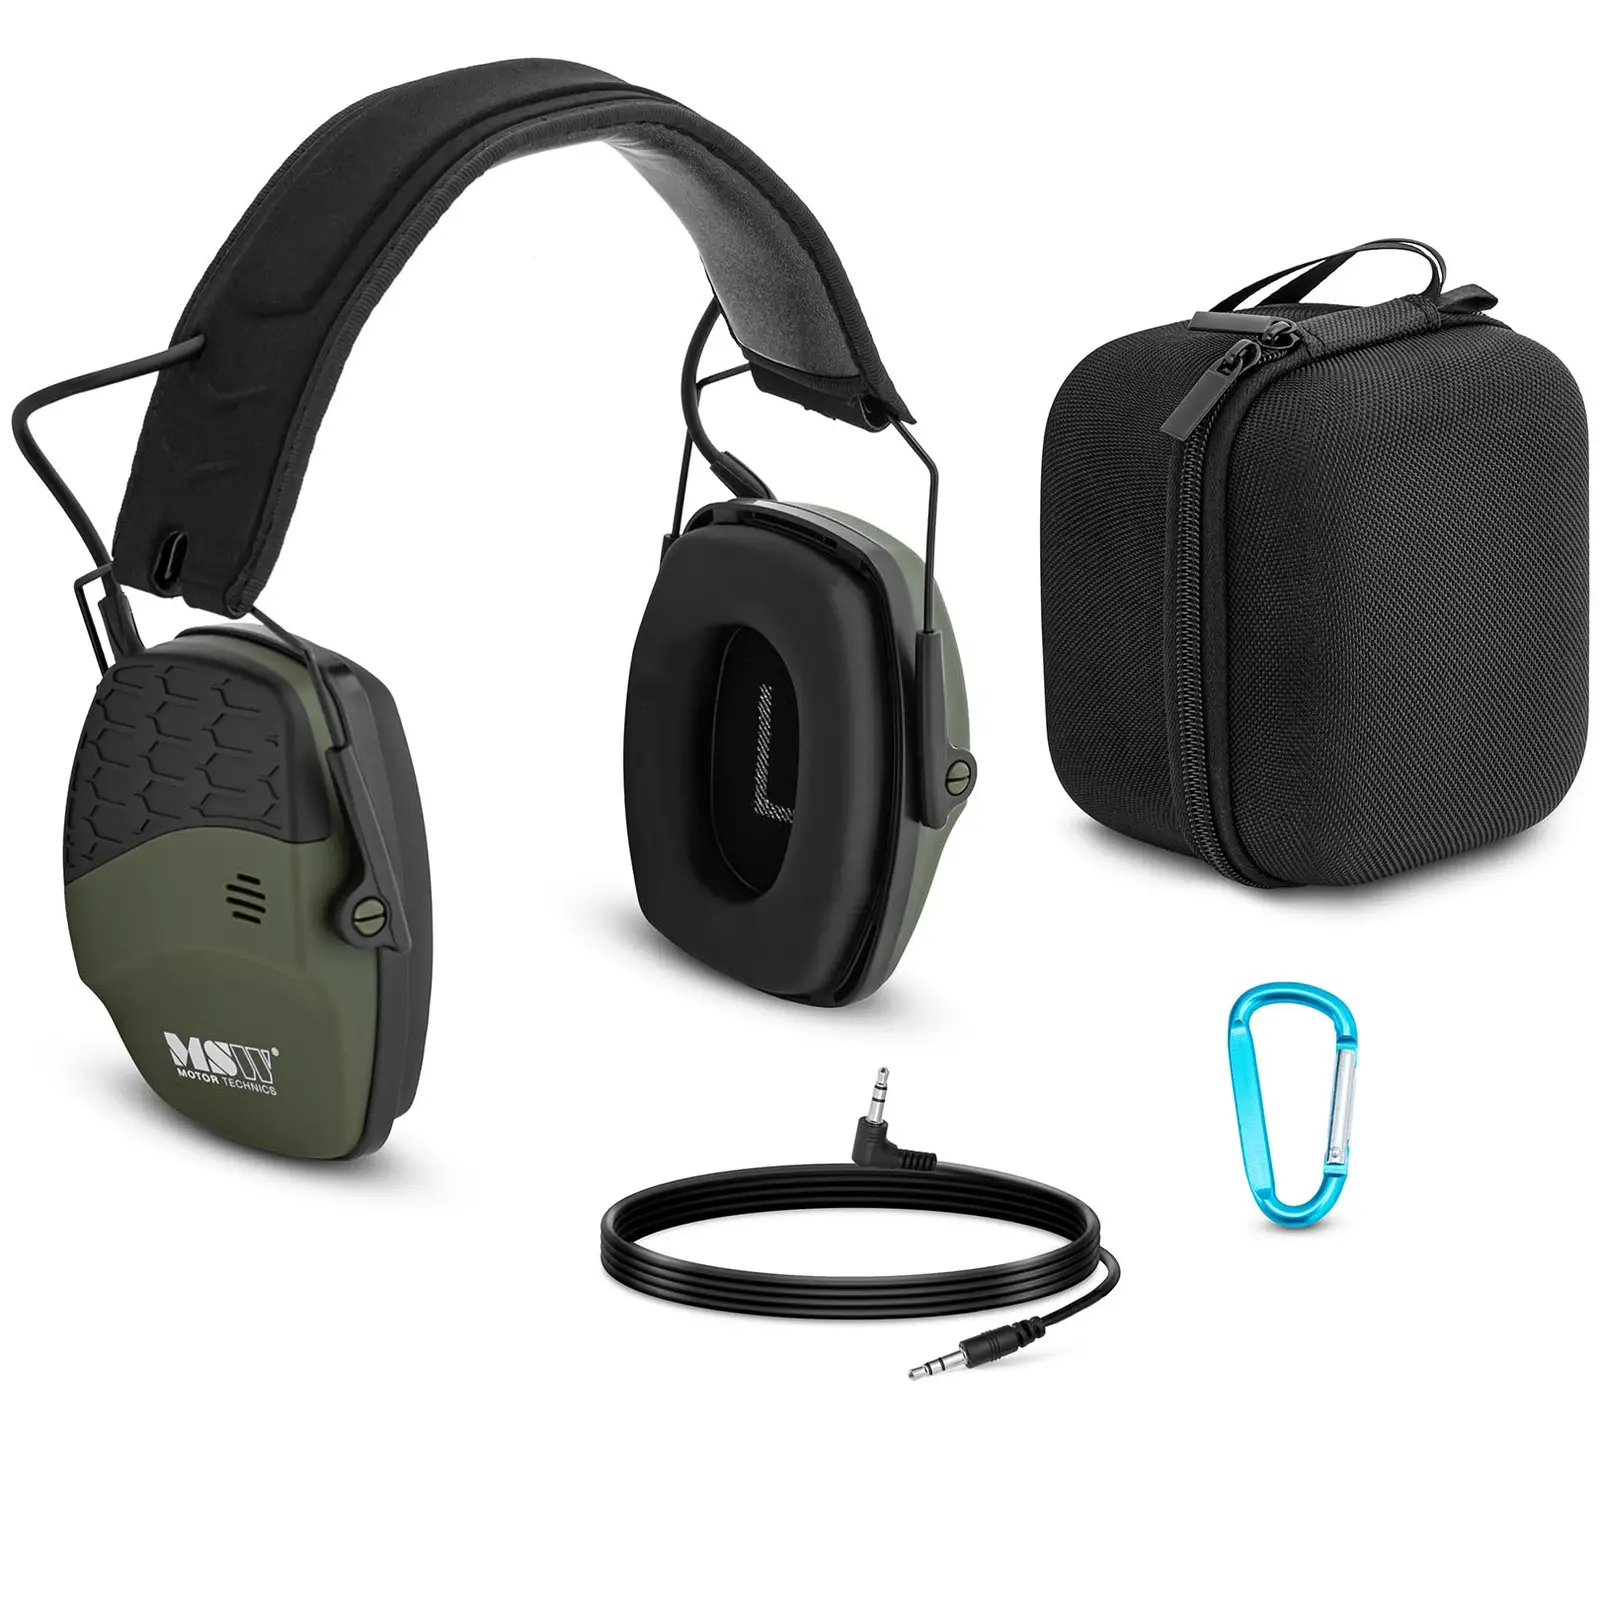 Bluetooth slušalke z odpravljanjem hrupa - dinamični zunanji nadzor hrupa - zelene